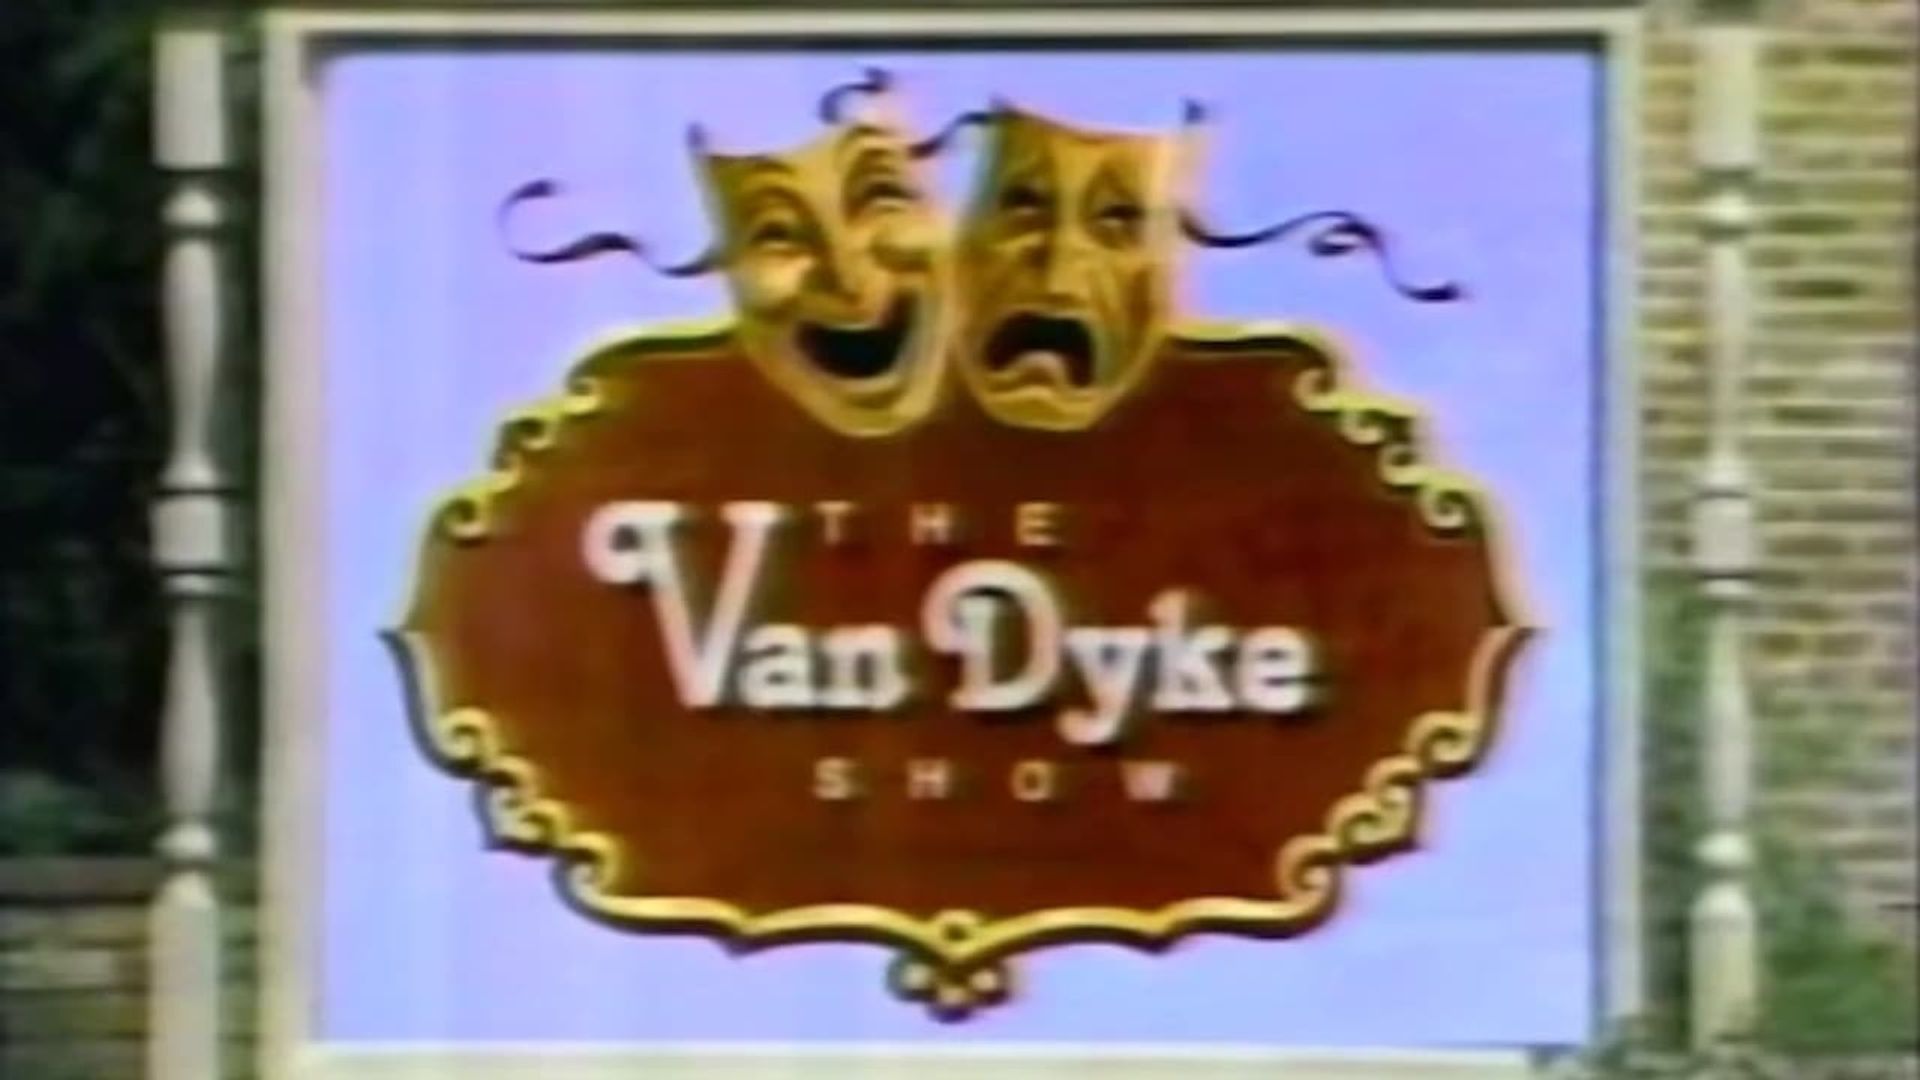 The Van Dyke Show background